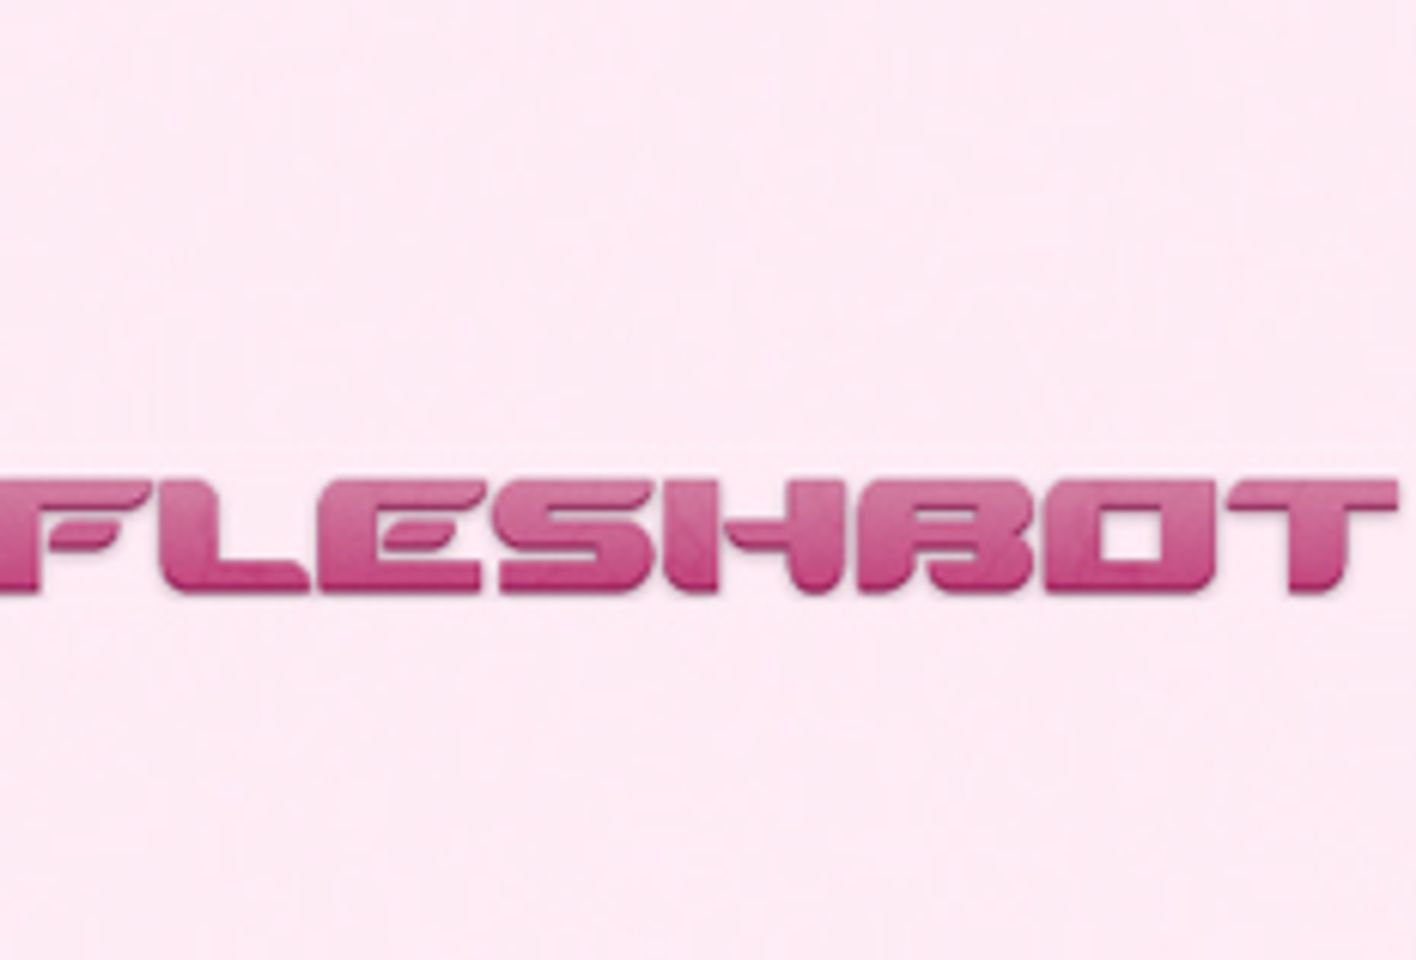 Kissa Sins Answers 20 Questions On Fleshbot